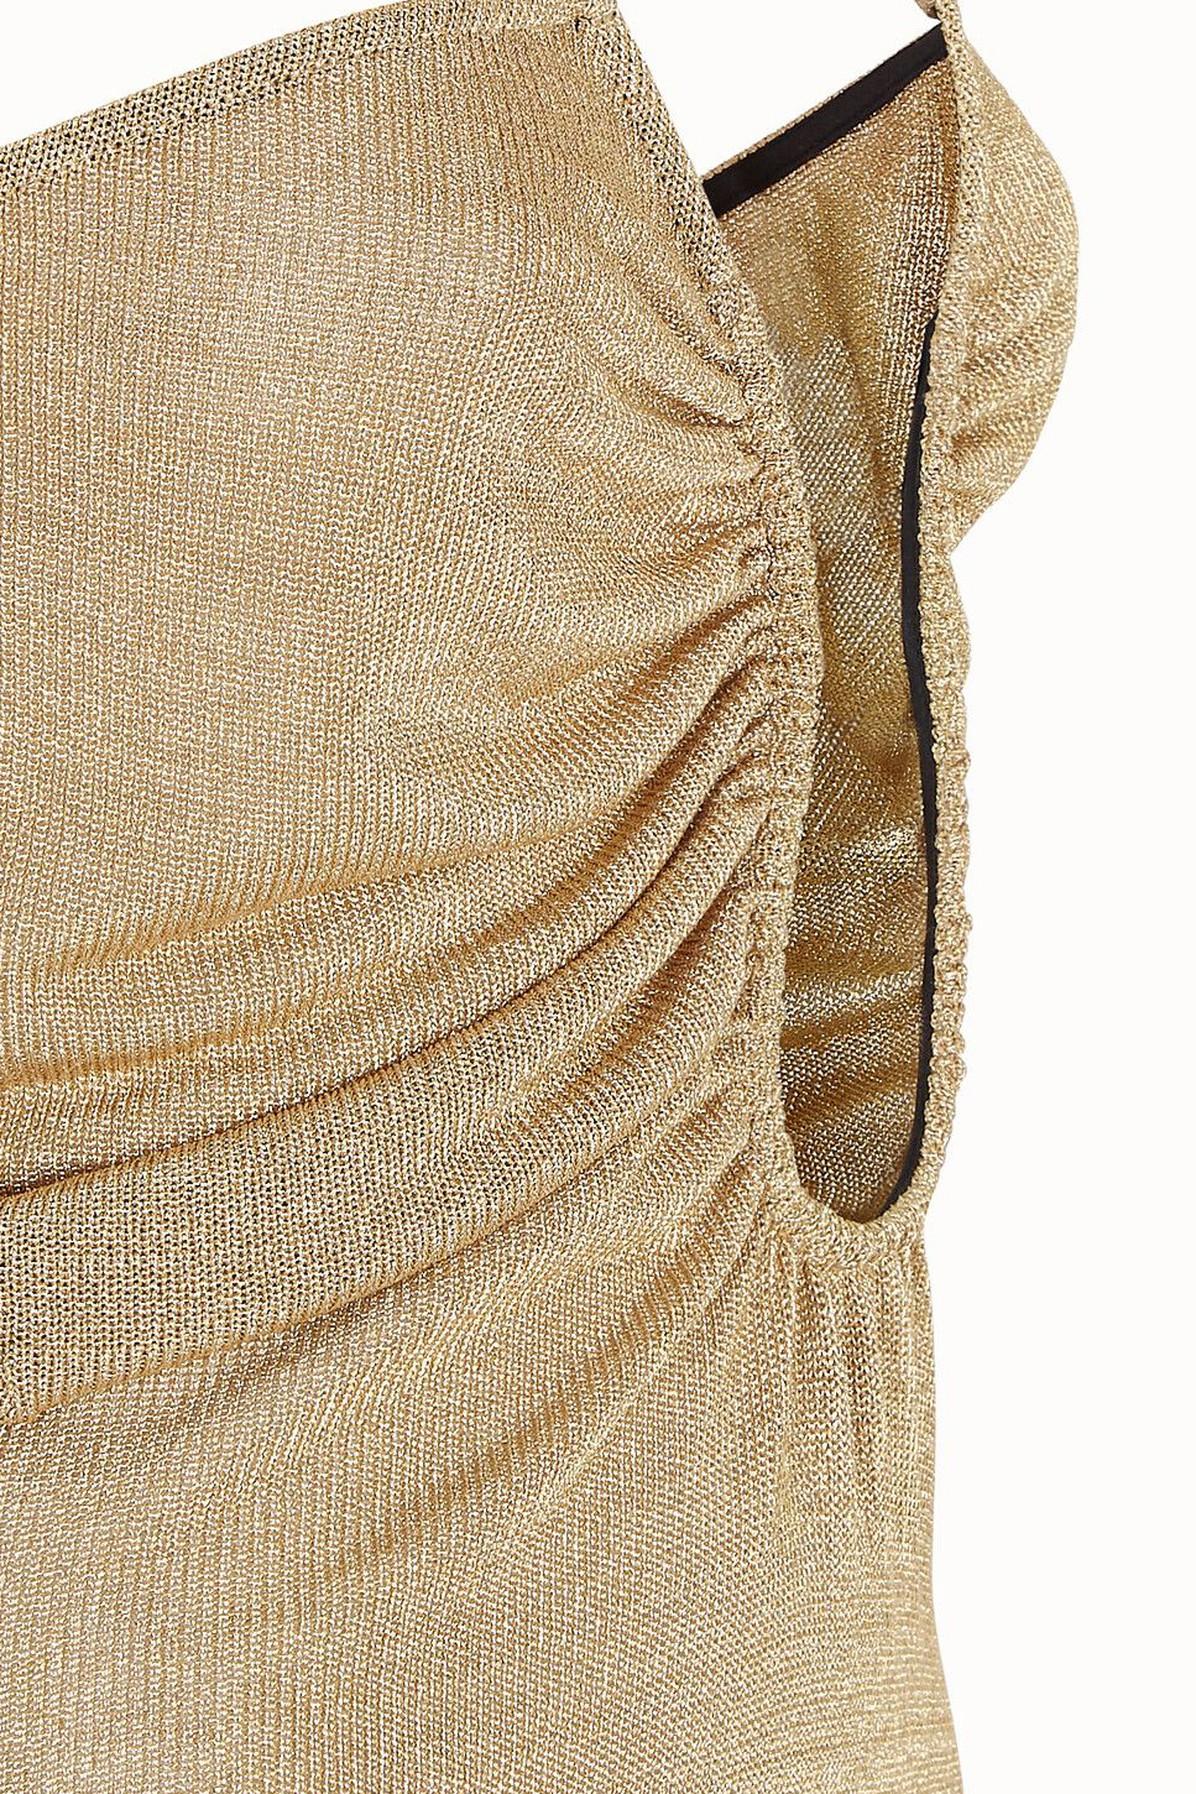 Fendi Gold Lurex Dress in Metallic | Lyst